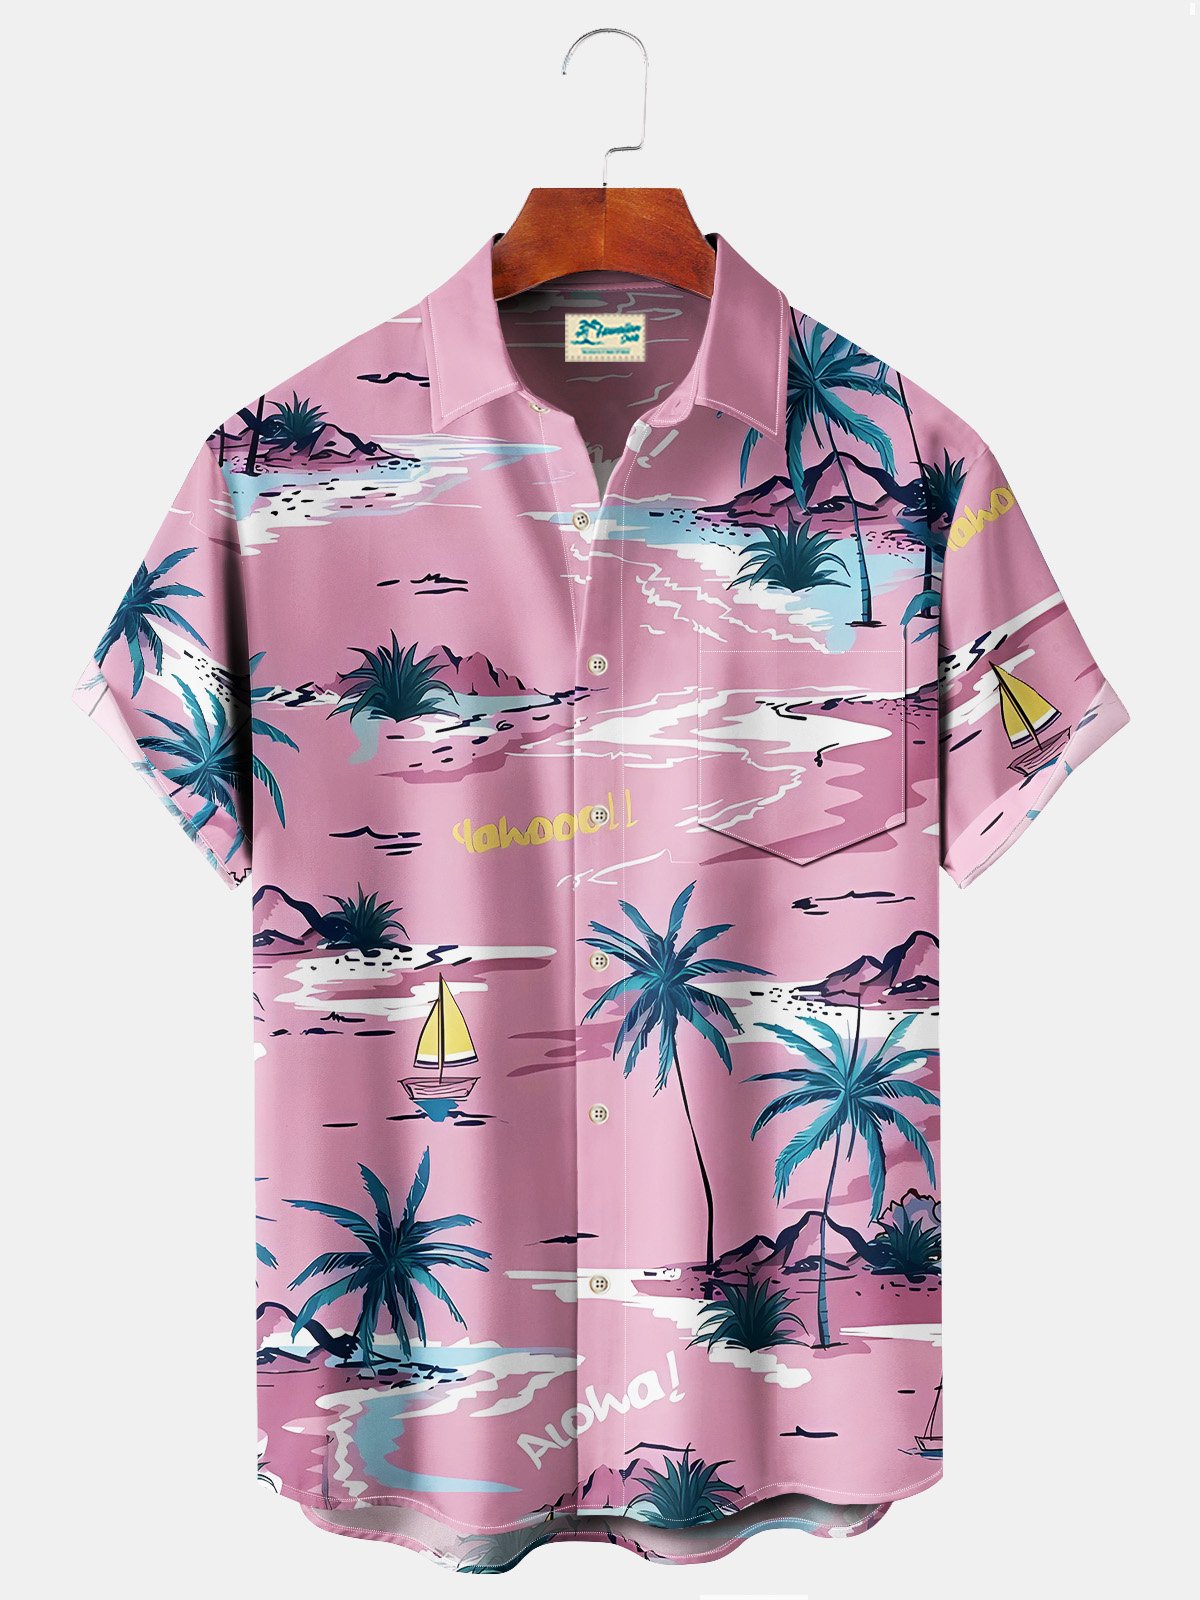 Royaura Beach Vacation Pink Men's Hawaiian Shirts Island Coconut Tree Art Stretch Plus Size Aloha Holiday Camp Shirts